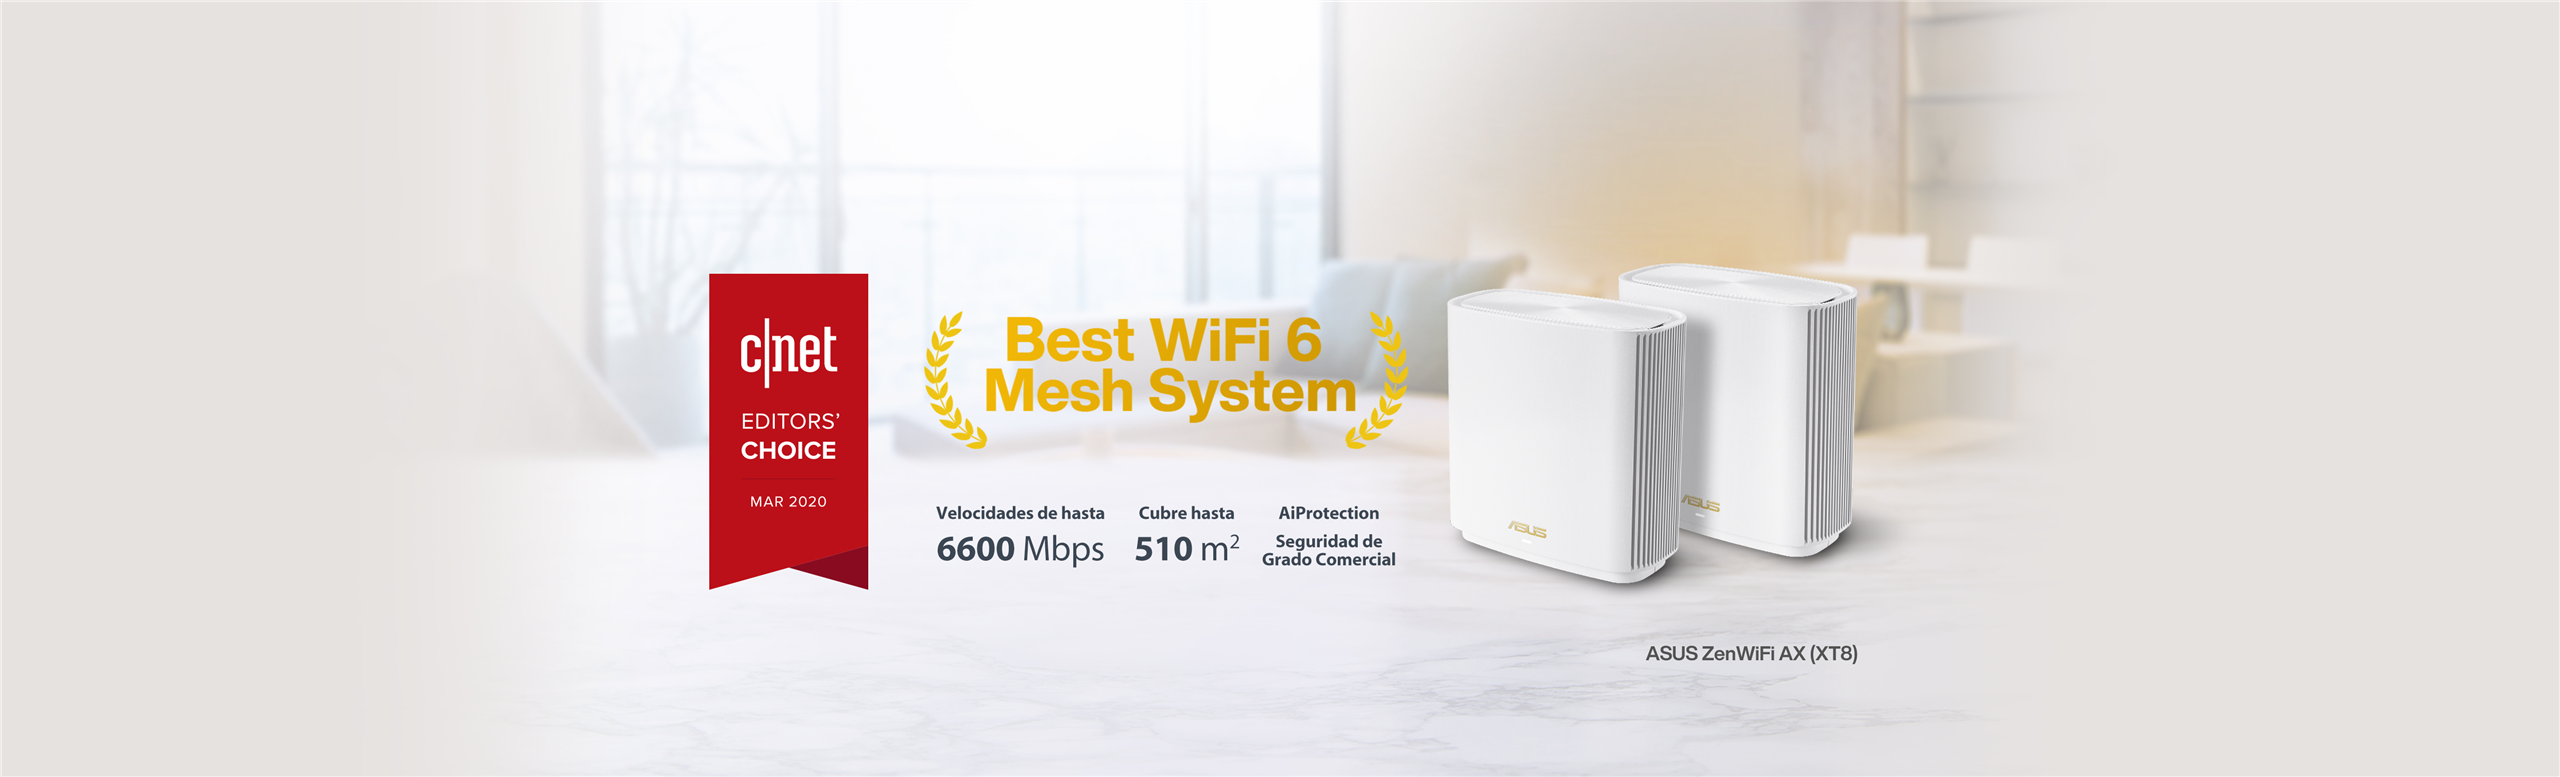 Best WiFi 6 Mesh System